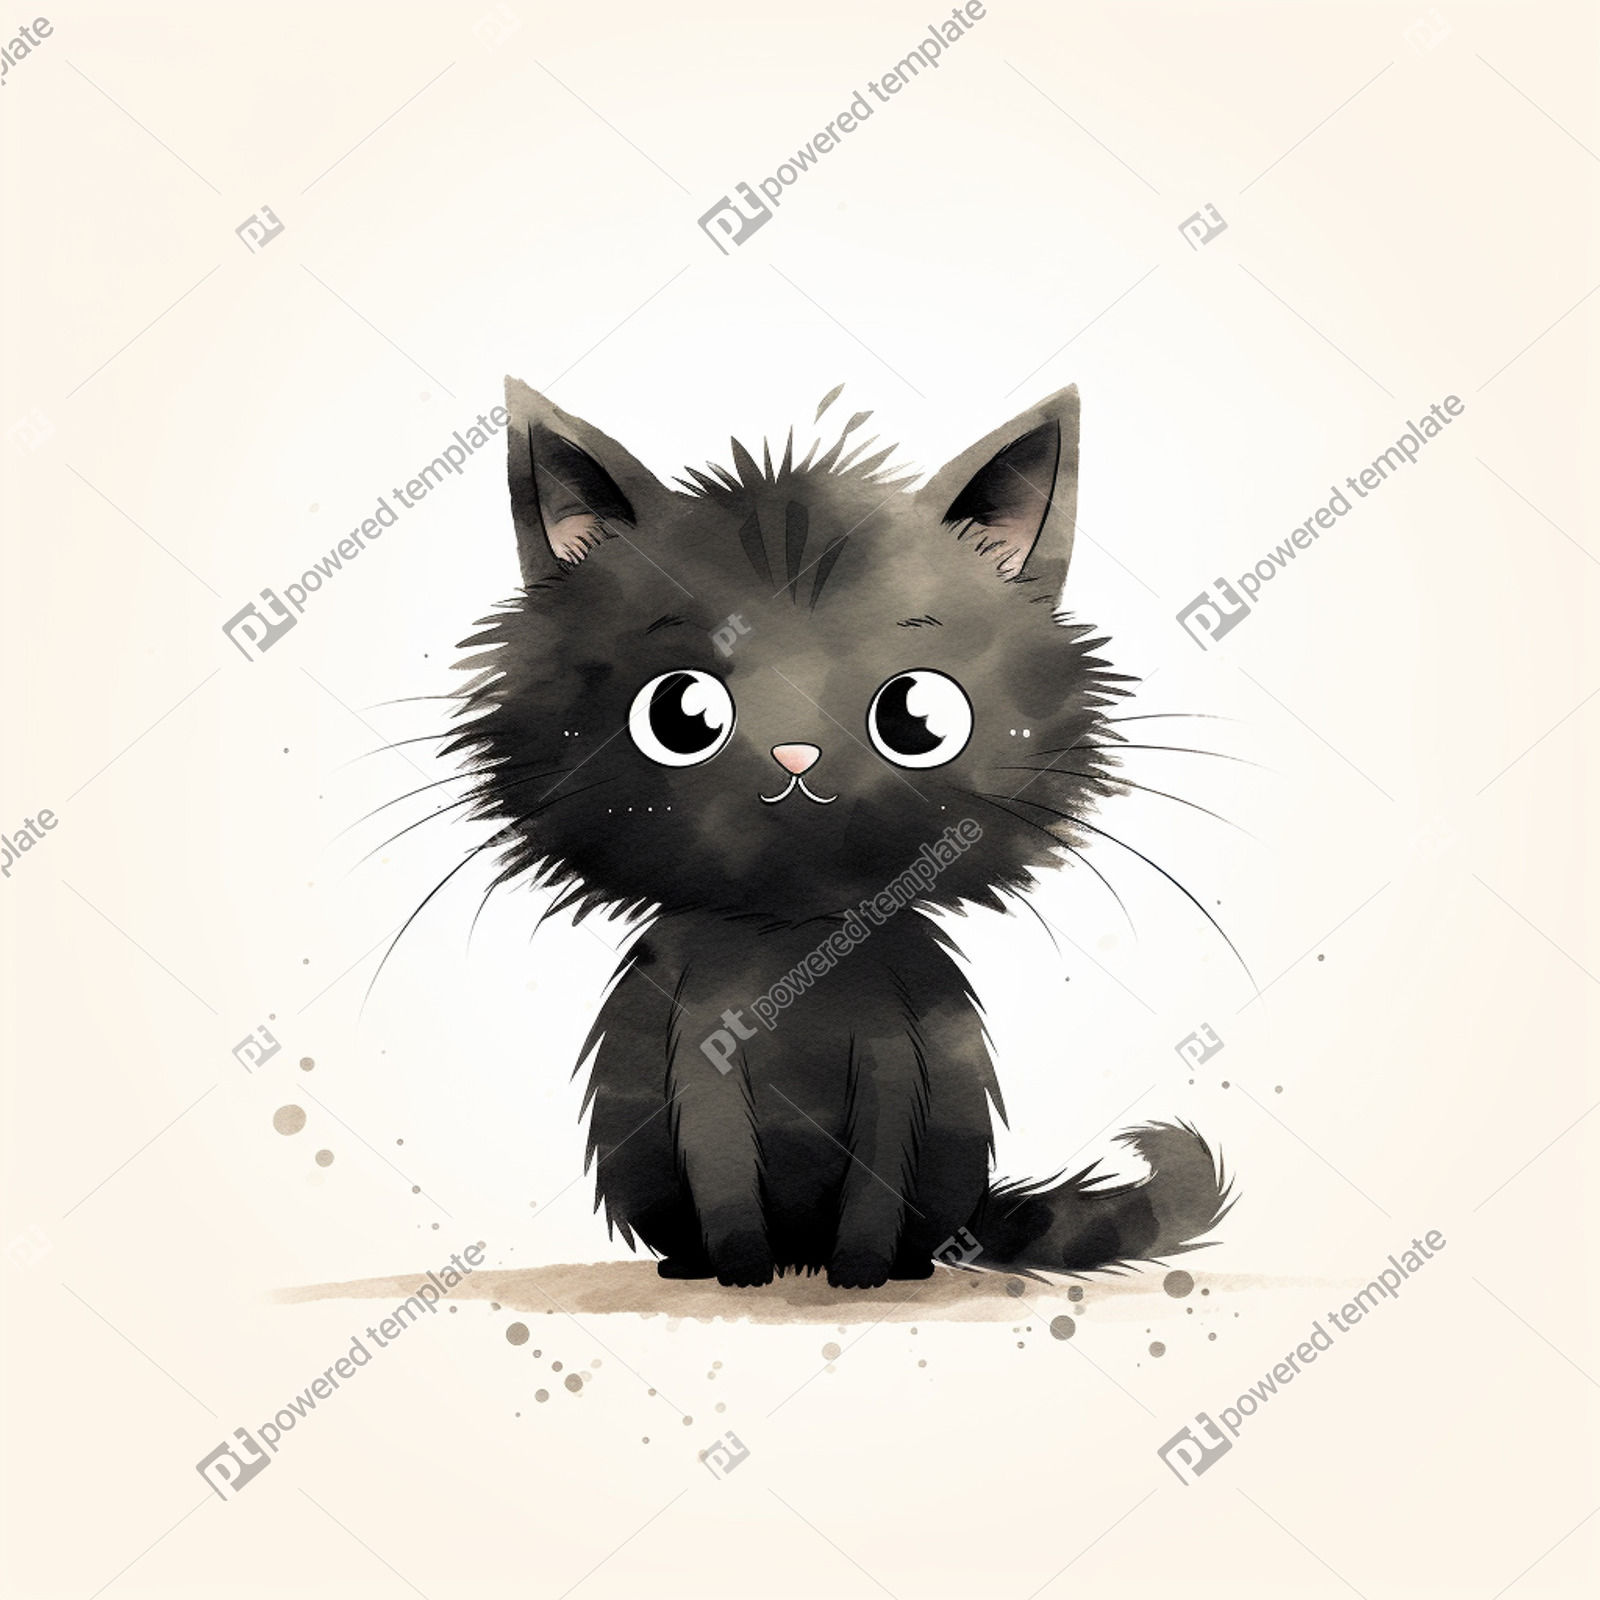 Adorable Kawaii Cat Illustration: Cute and Charming Feline Art